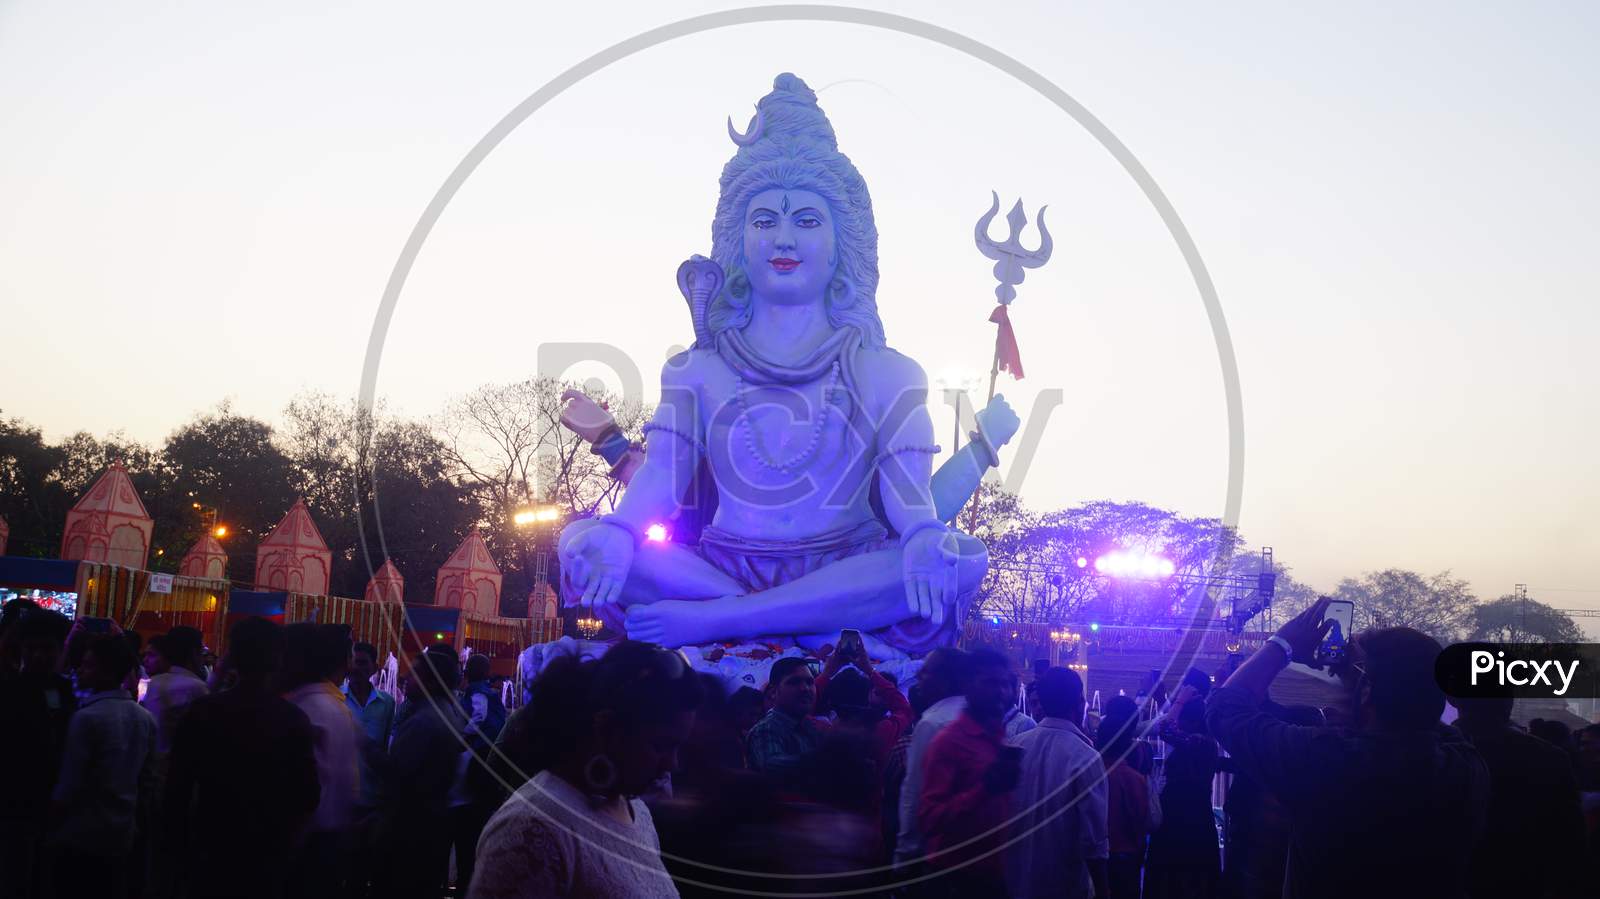 Big Statue of Hindu God Shankar